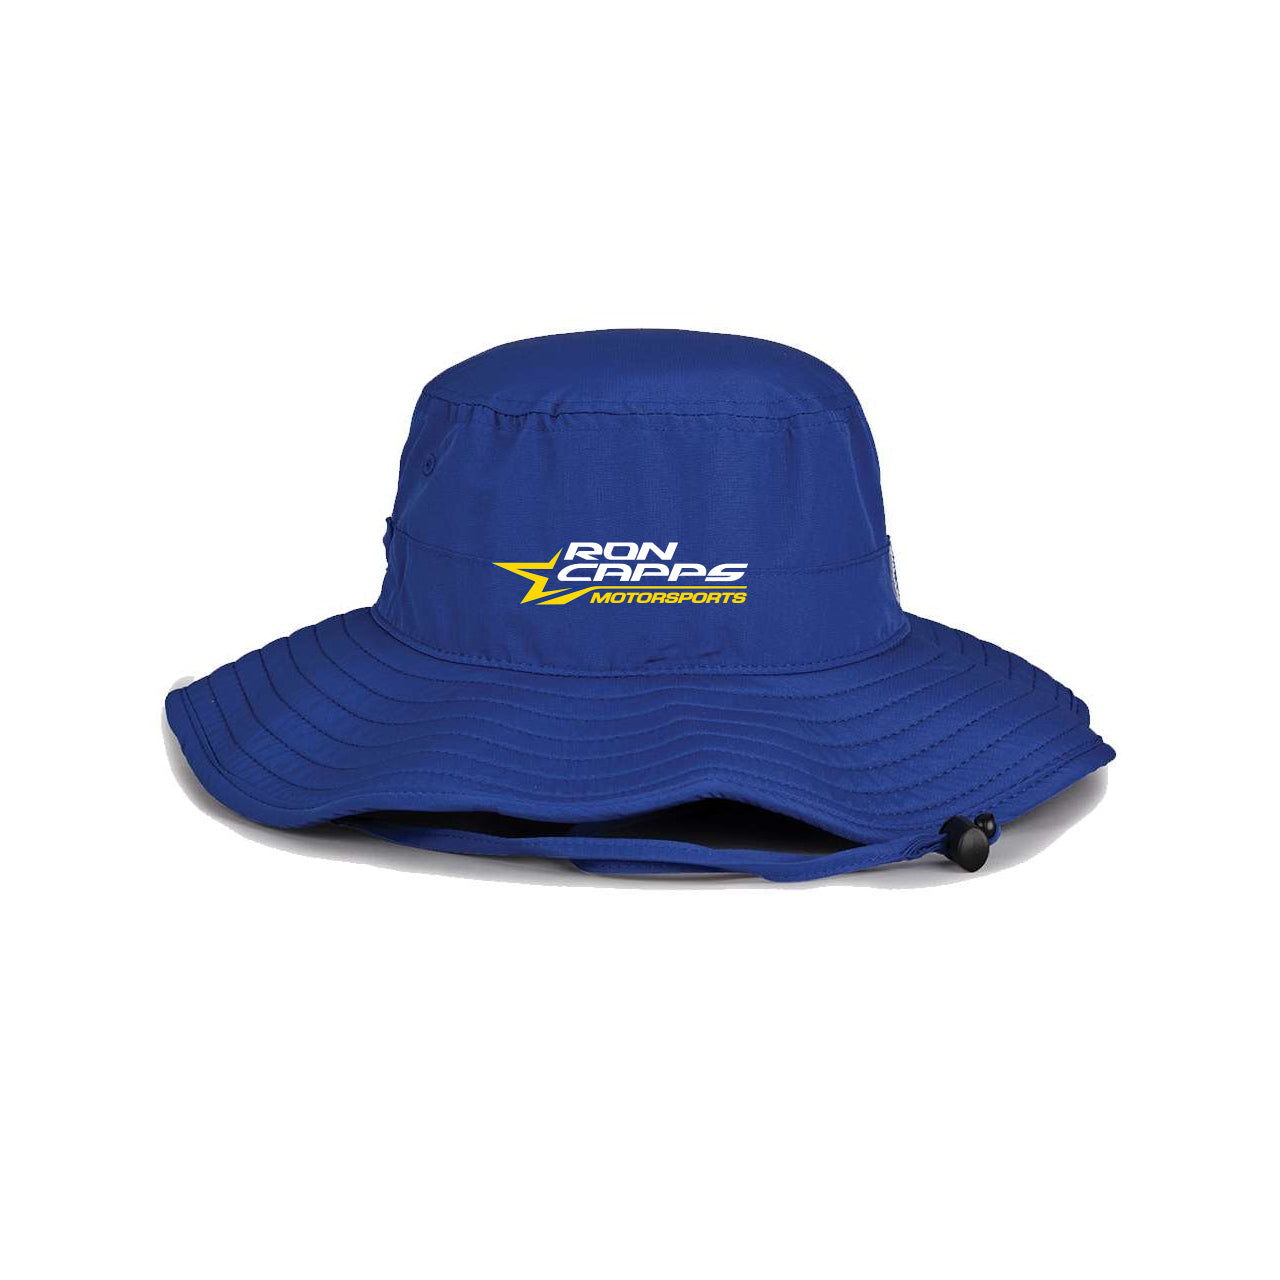 Ron Capps Motorsports Bucket Hat - Royal